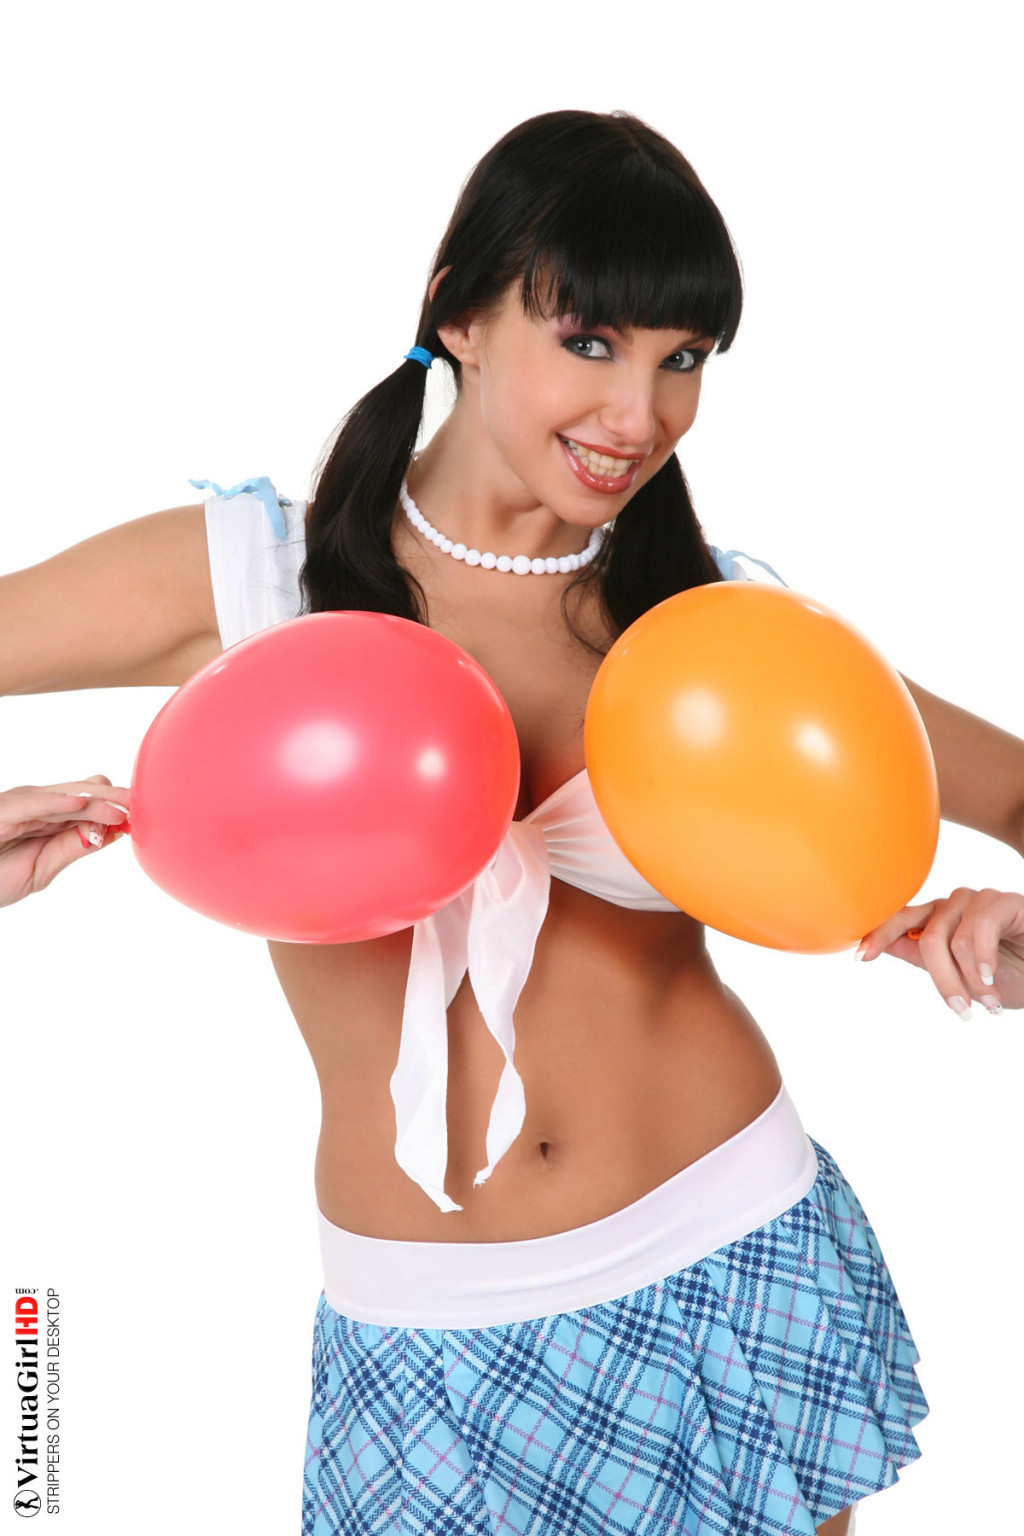 Pigtailed Polish Model Marta Zawadzka Playing With Balloons #71058236